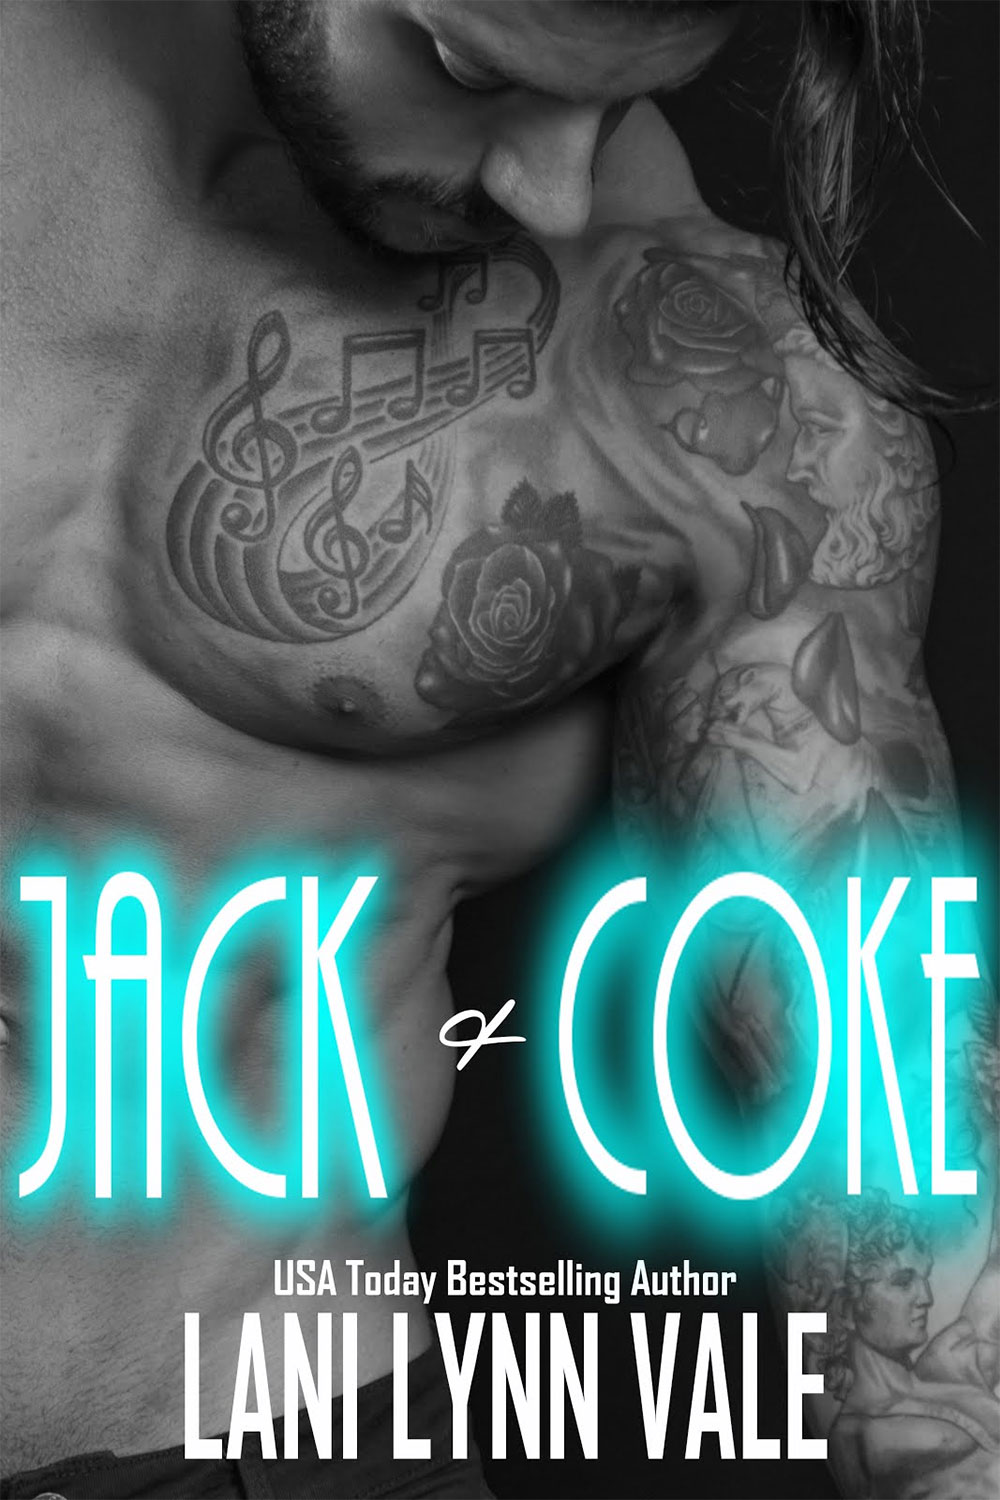 The Uncertain Saint’s MC: Jack & Coke